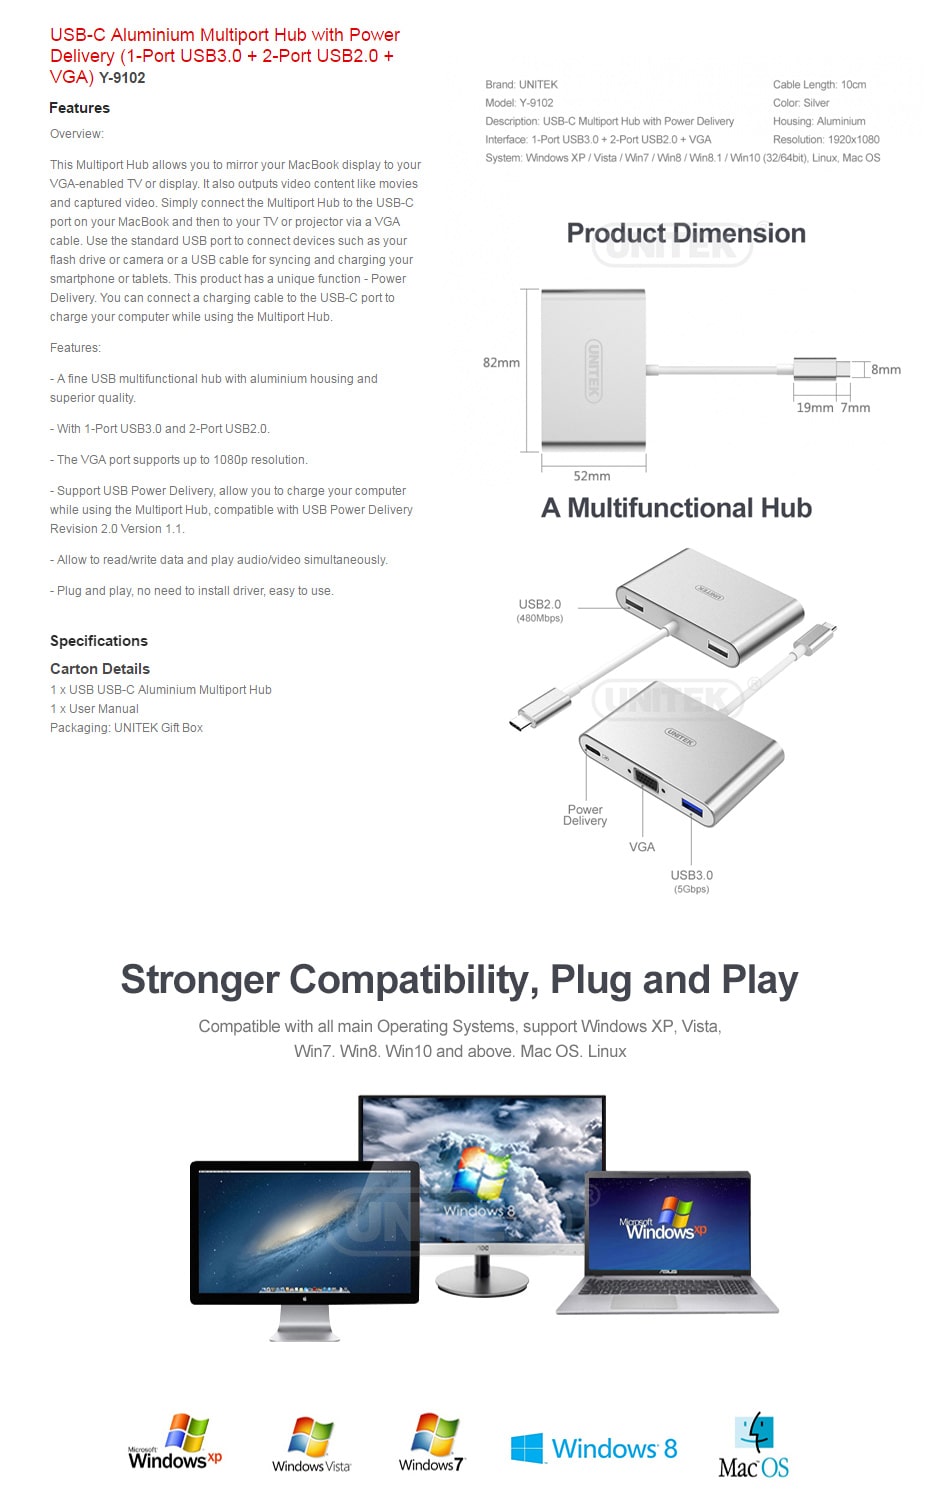 Unitek USB C Aluminium Multiport Hub with Power Delivery Y9102